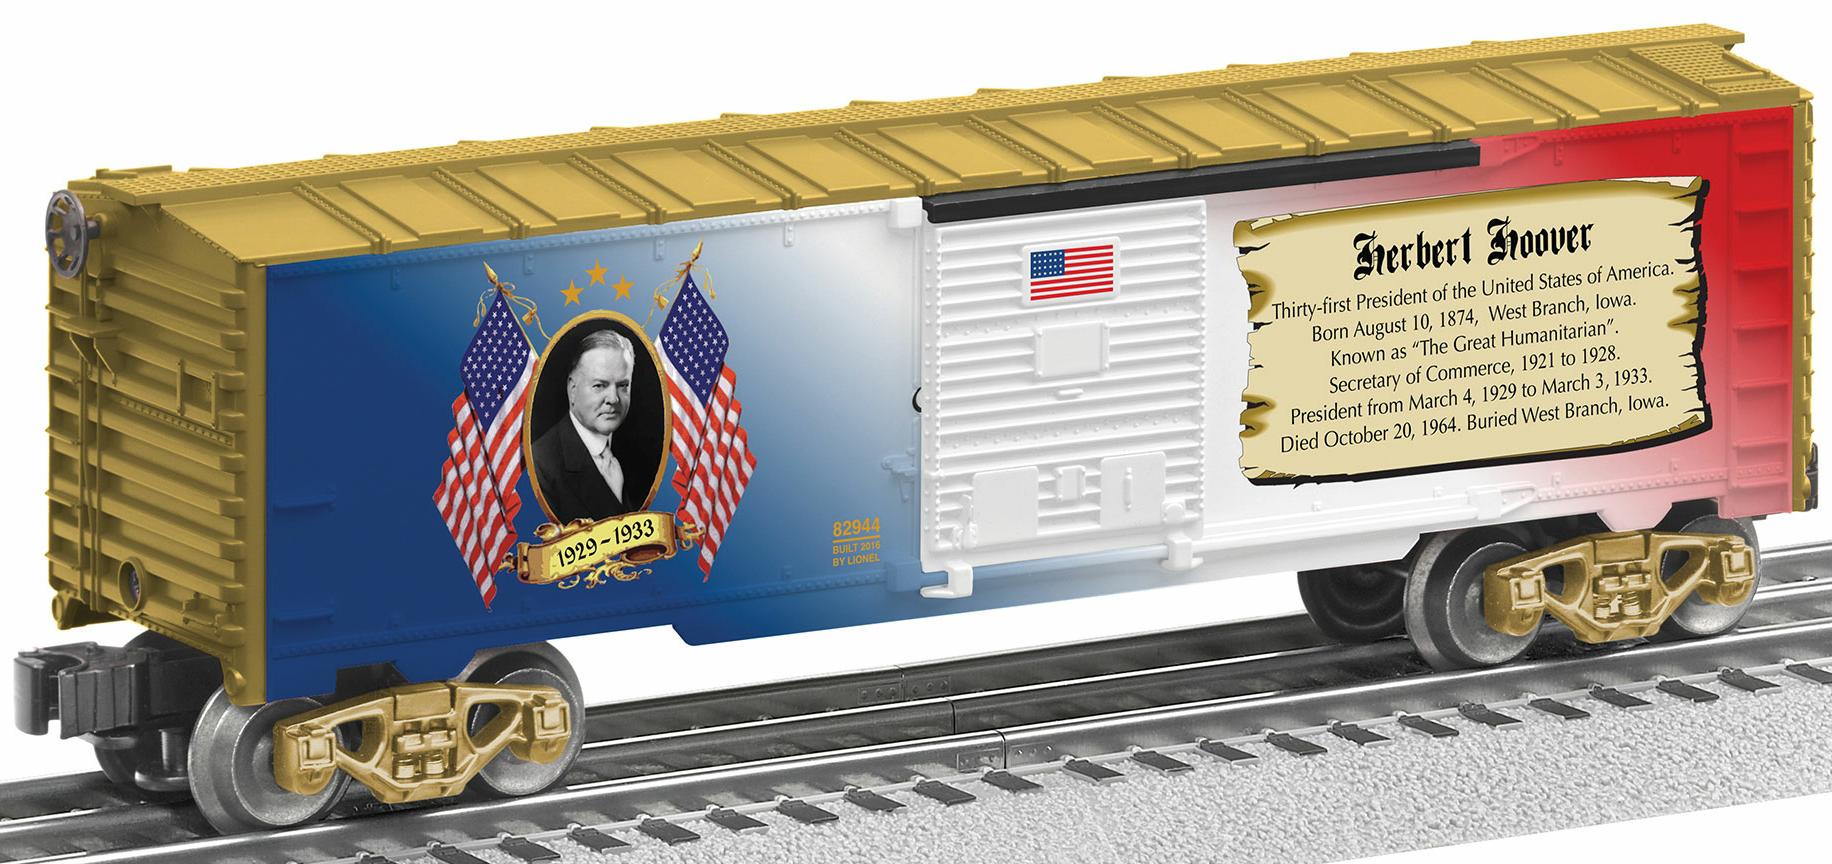 Herbert Hoover boxcar image